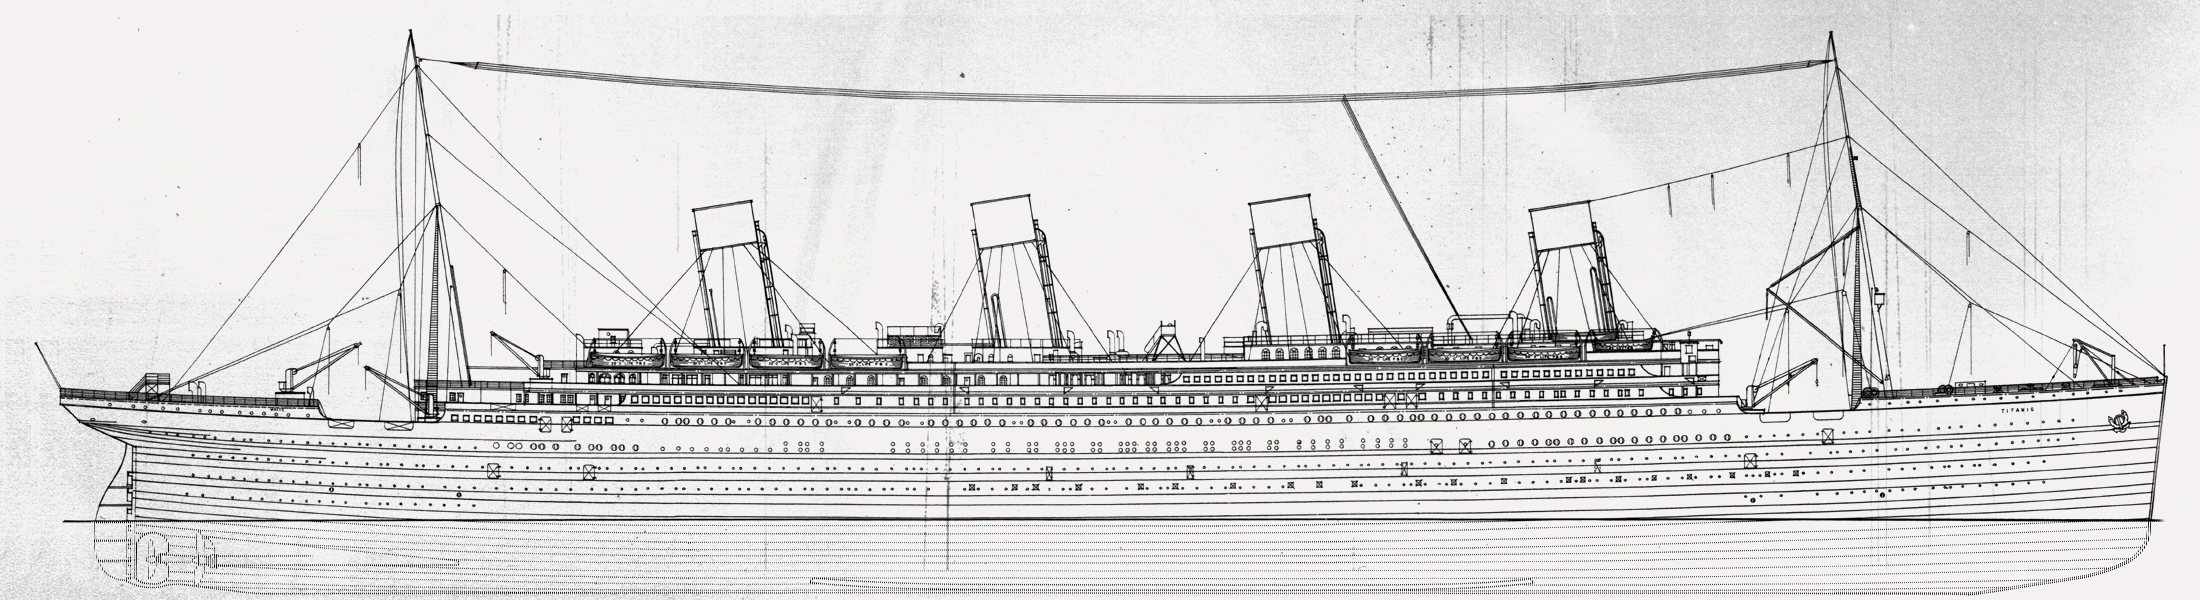 James Cameron's Titanic Explorer - Elevation